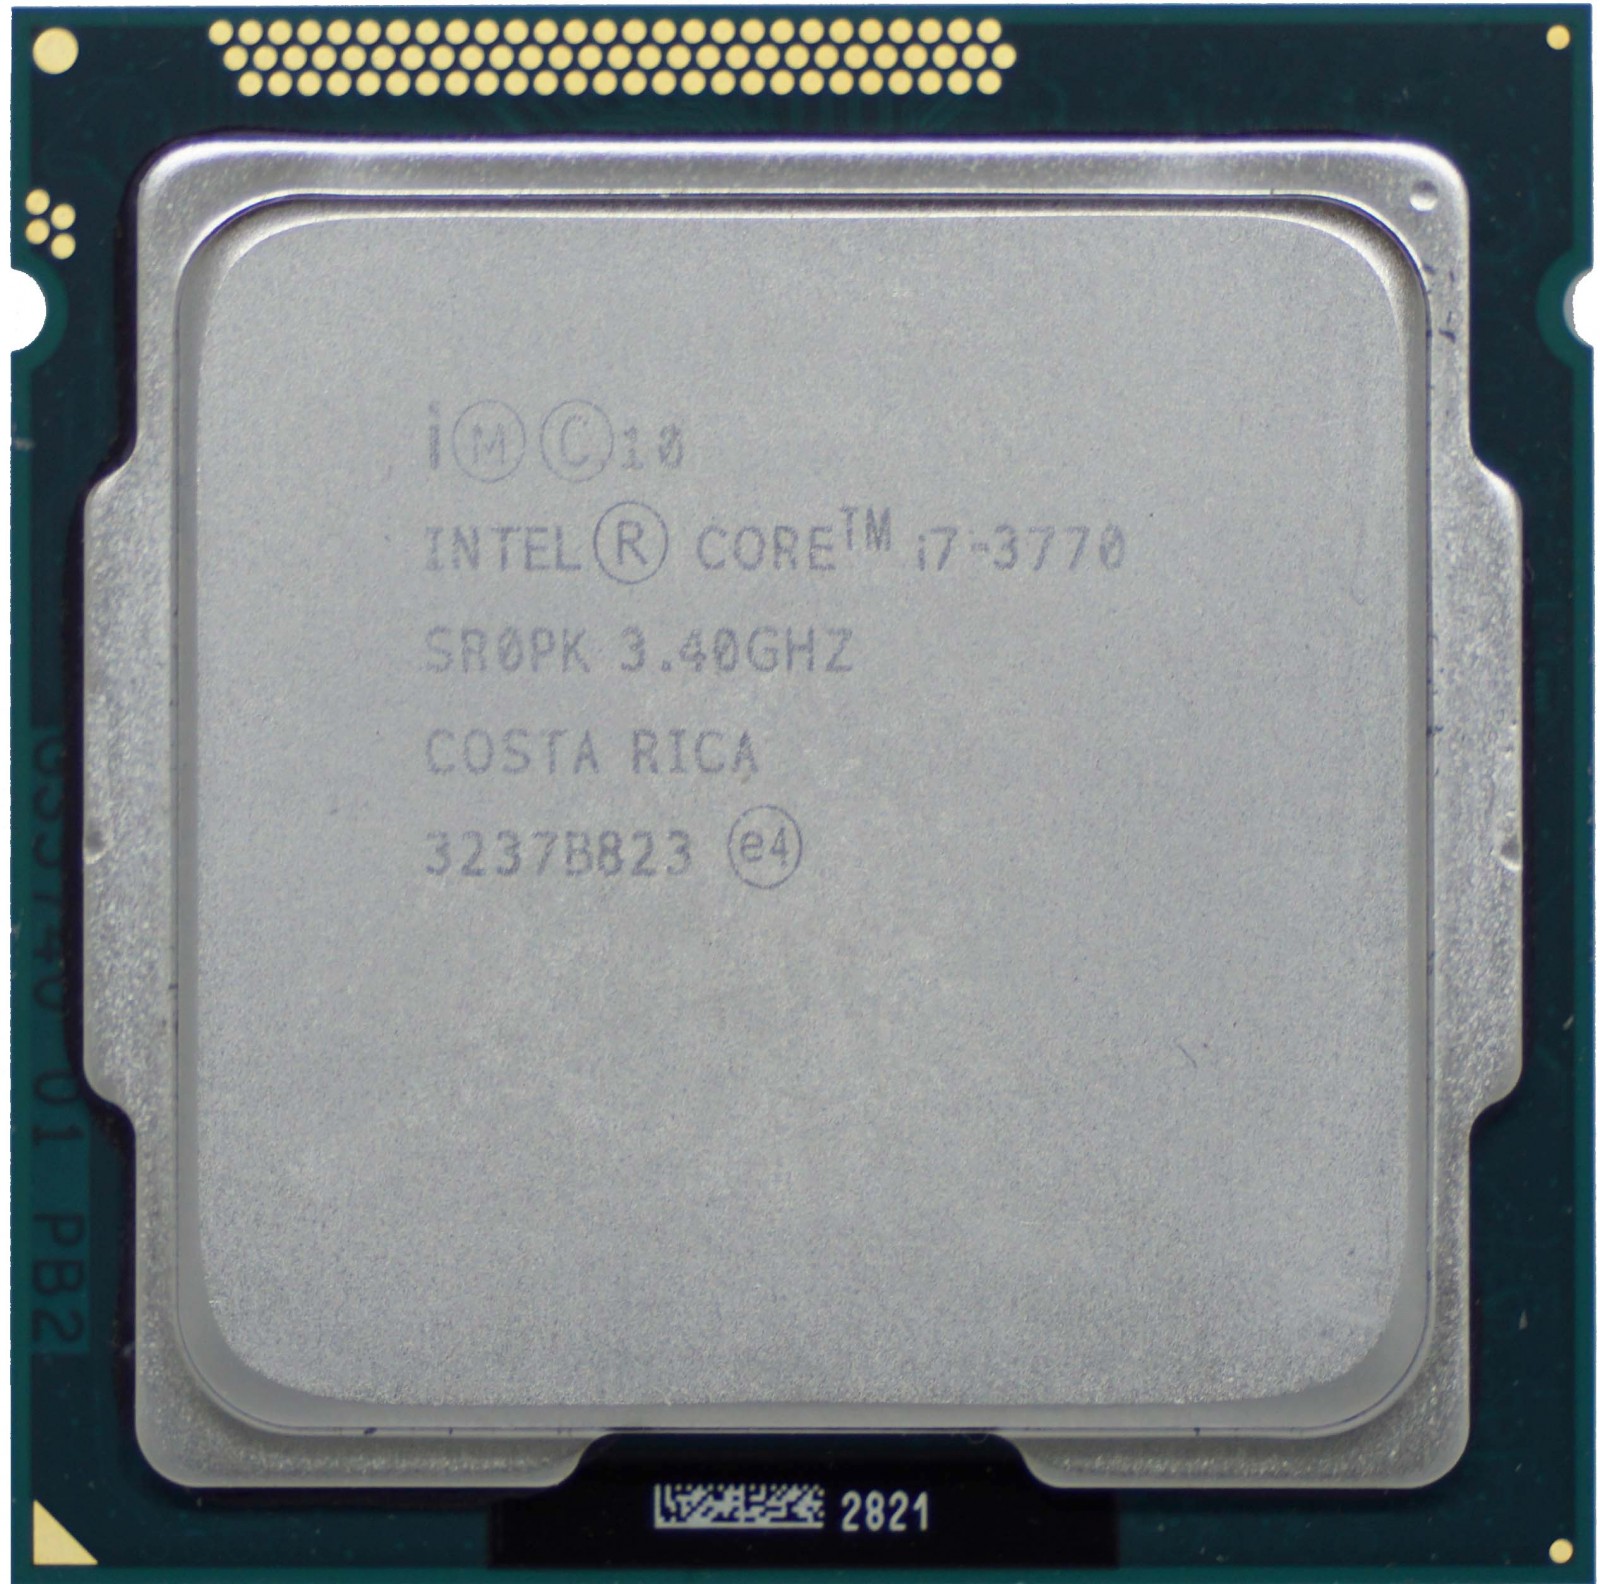 Intel Core i7 3770 3.40Ghz SR0PK4スレッド数